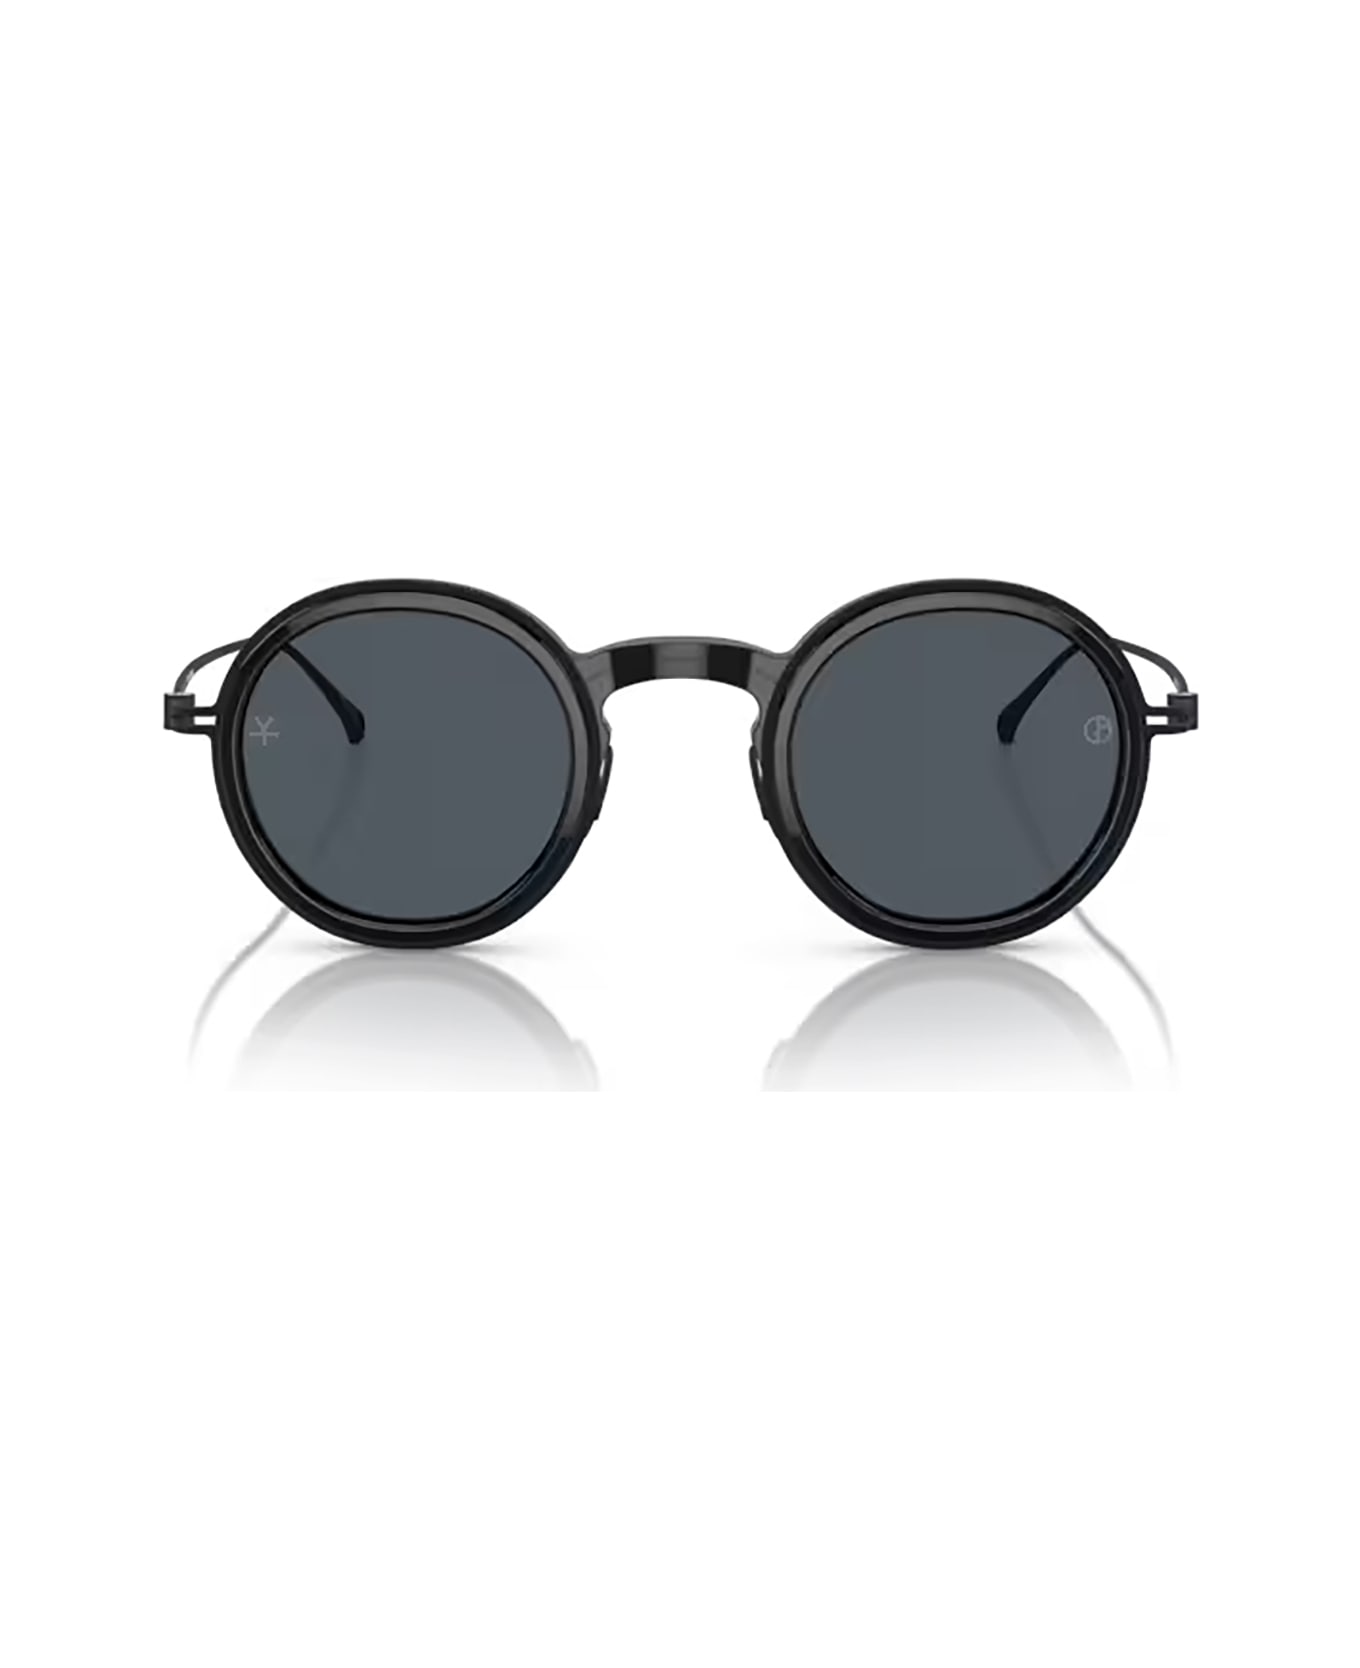 Giorgio Armani Ar6147t Shiny Black Sunglasses - Shiny Black